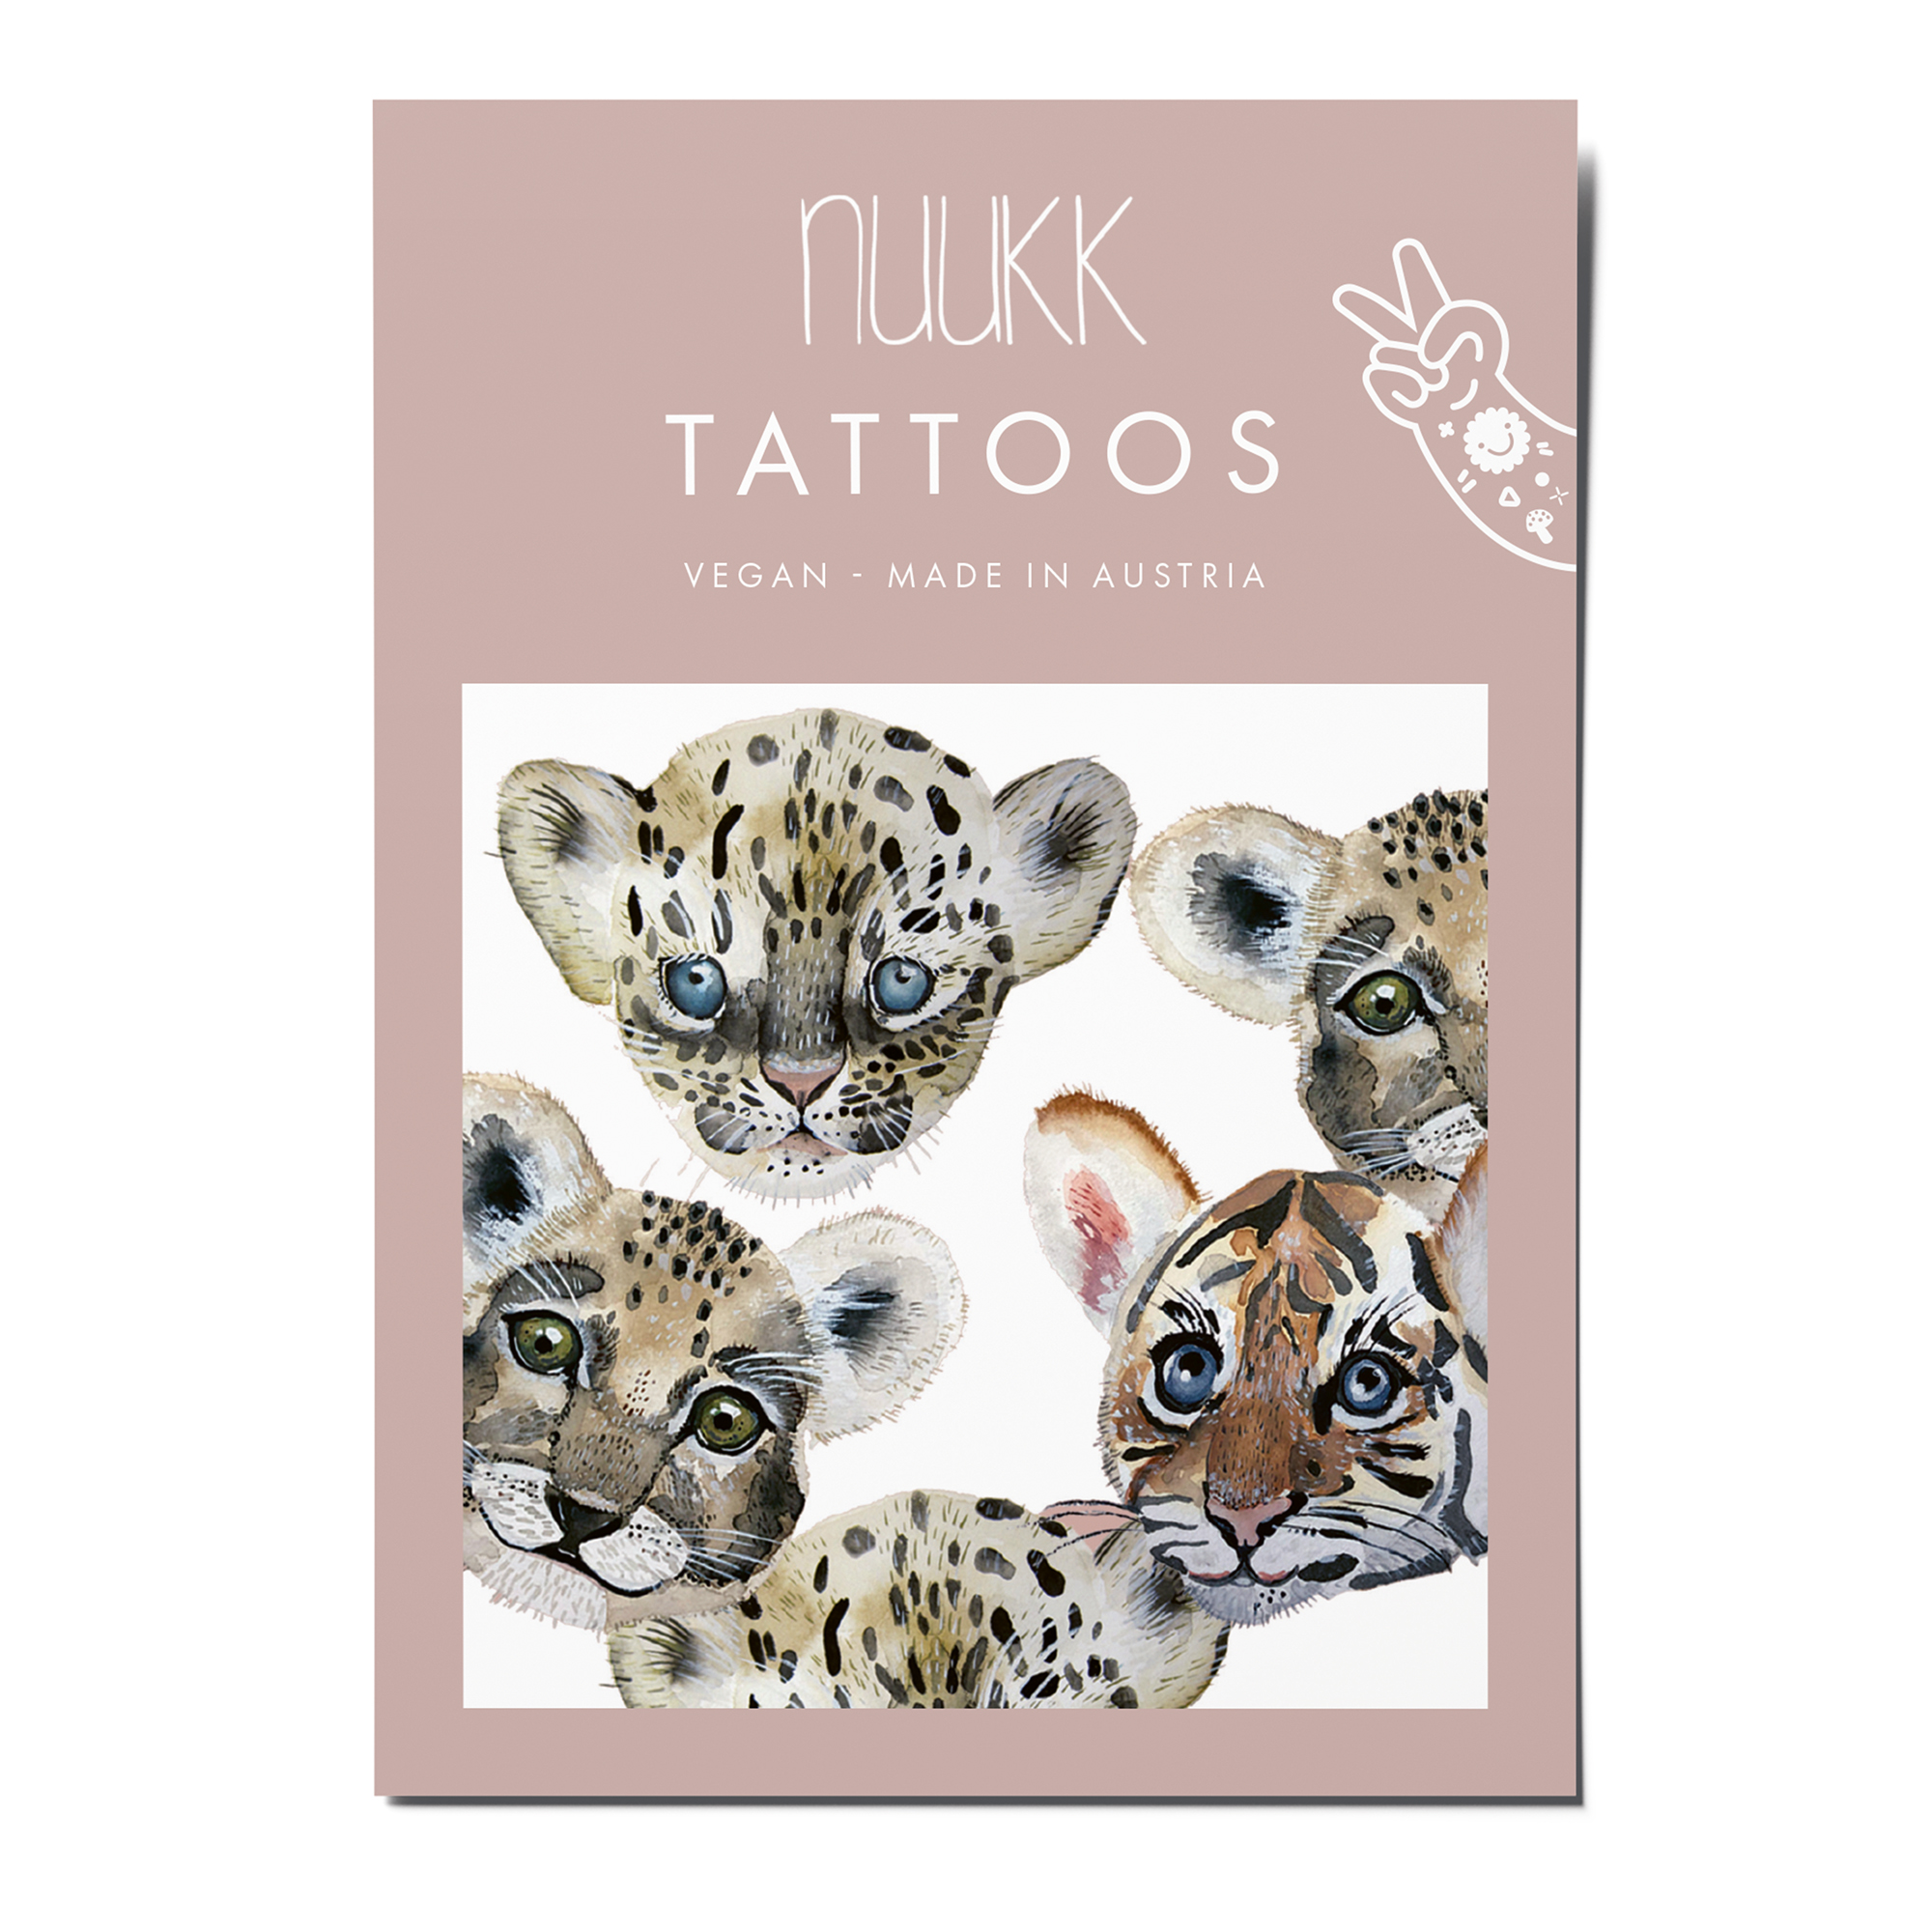 tiny roar packaging vegan tattoos by nuukk, motive: kleine Löwen, Tiger, Leoparden